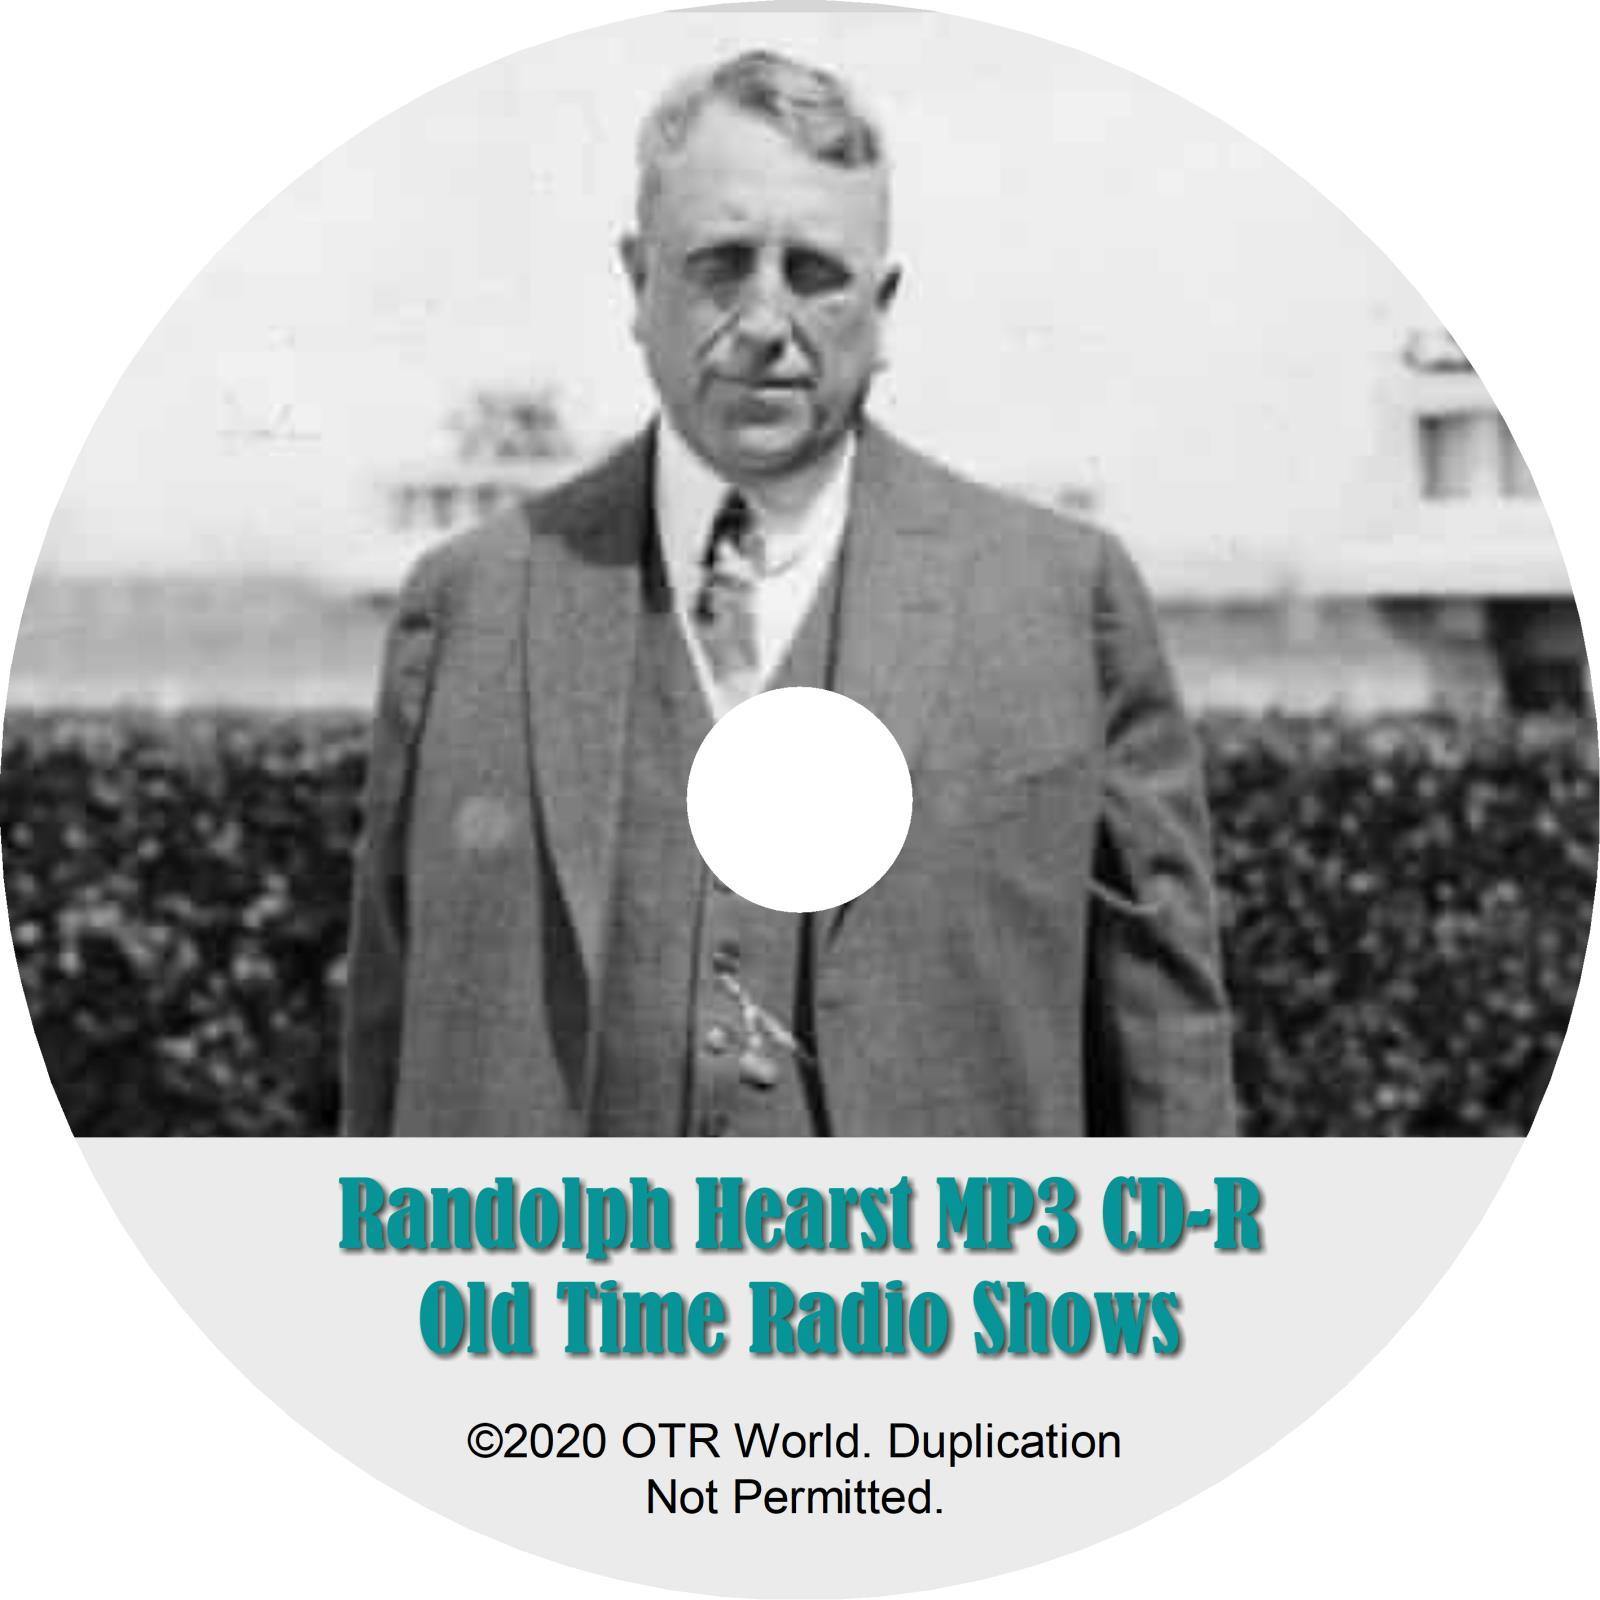 Randolph Hearst OTR OTRS Old Time Radio Shows MP3 On CD-R 2 Episodes - OTR World